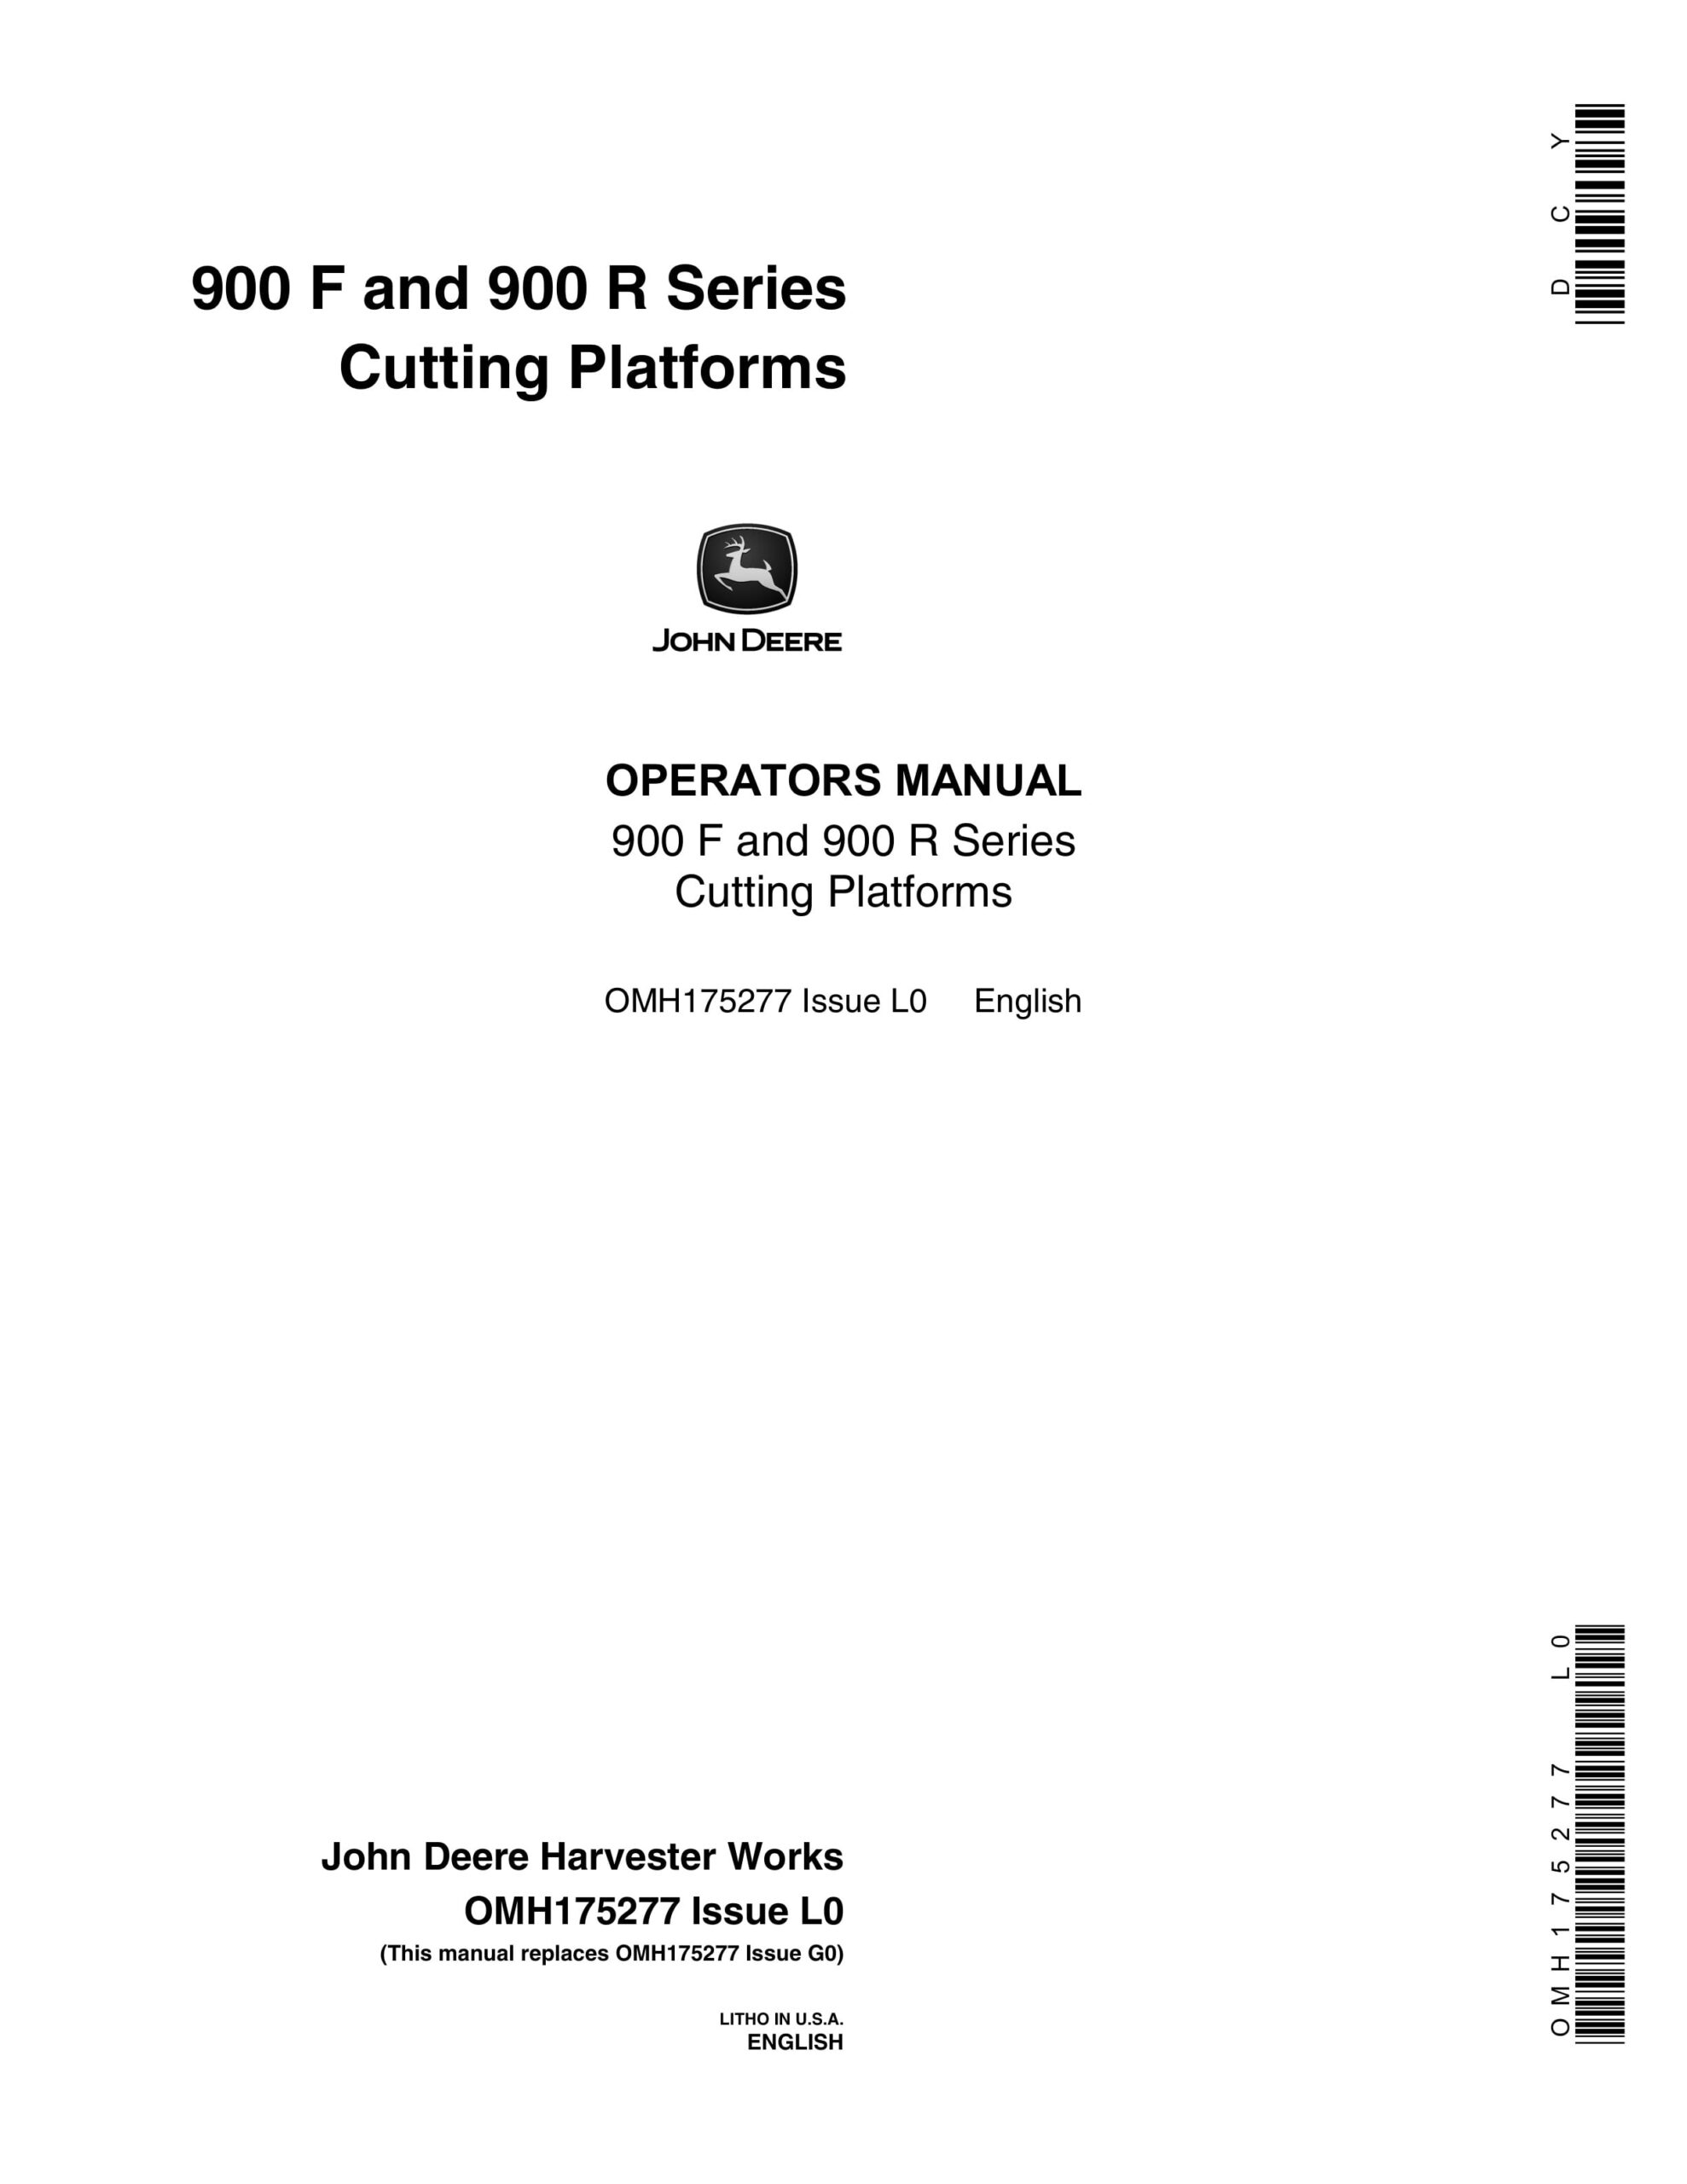 John Deere 900 F and 900 R Series Cutting Platform Operator Manual OMH175277-1